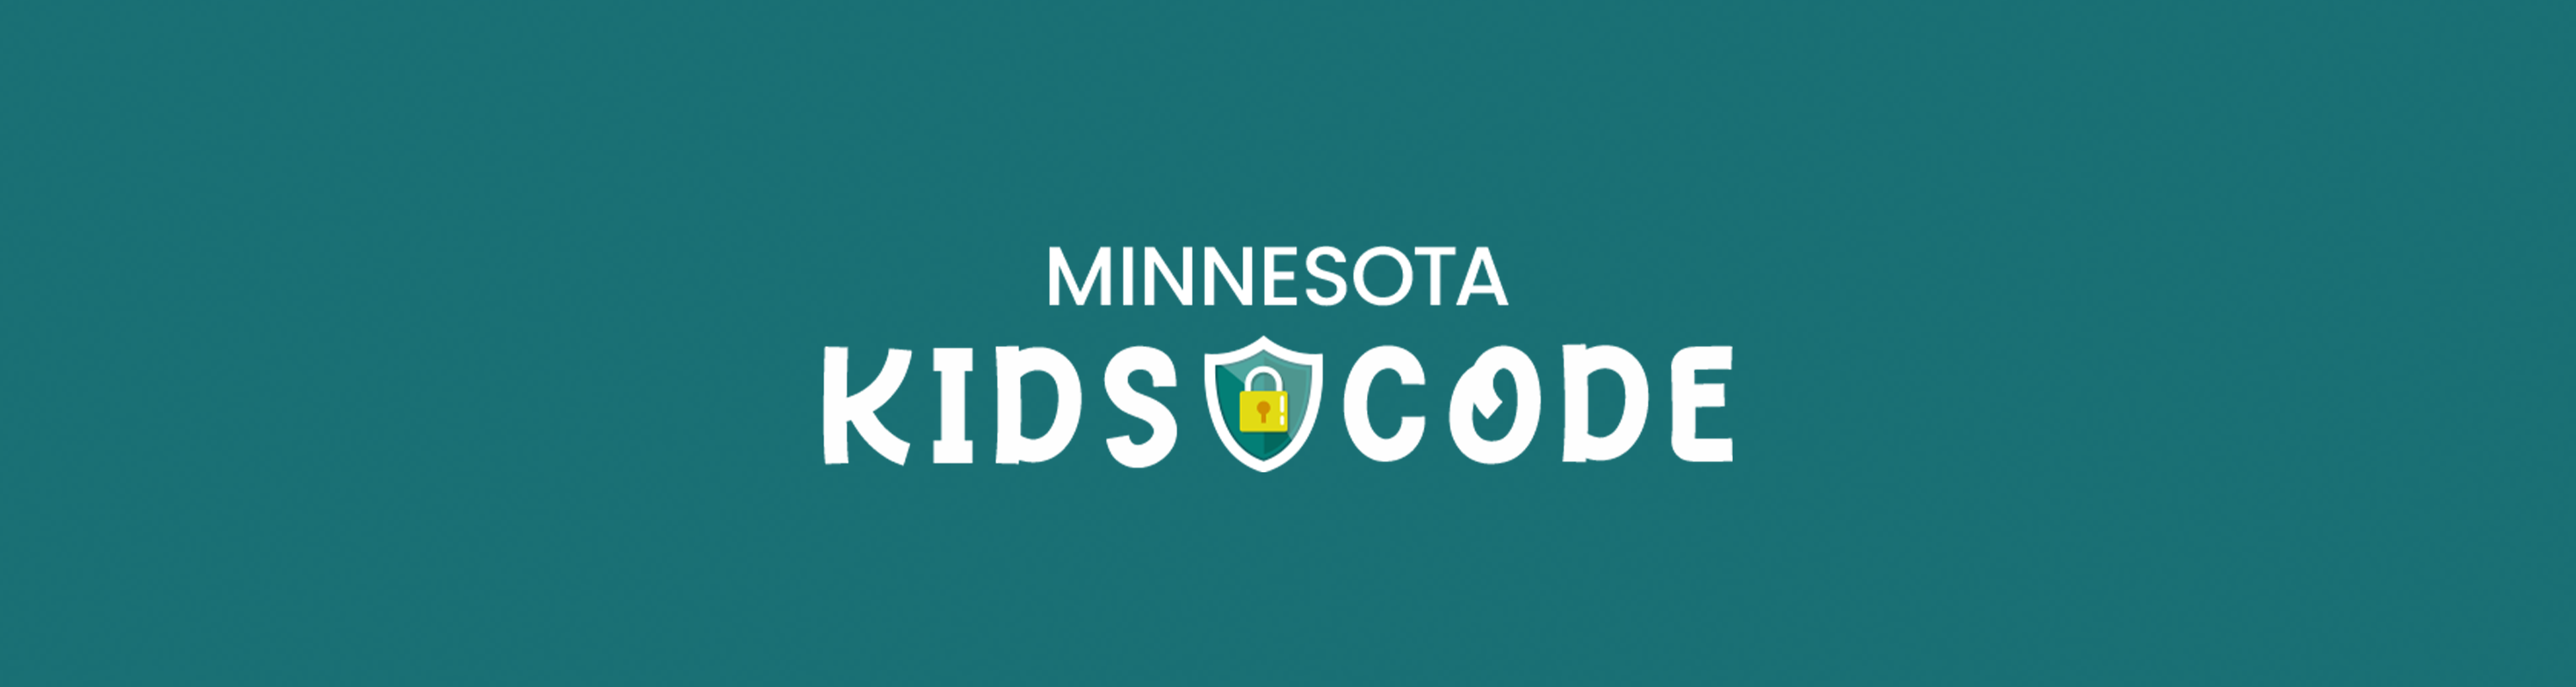 Minnesota Kids Code - Accountable Tech